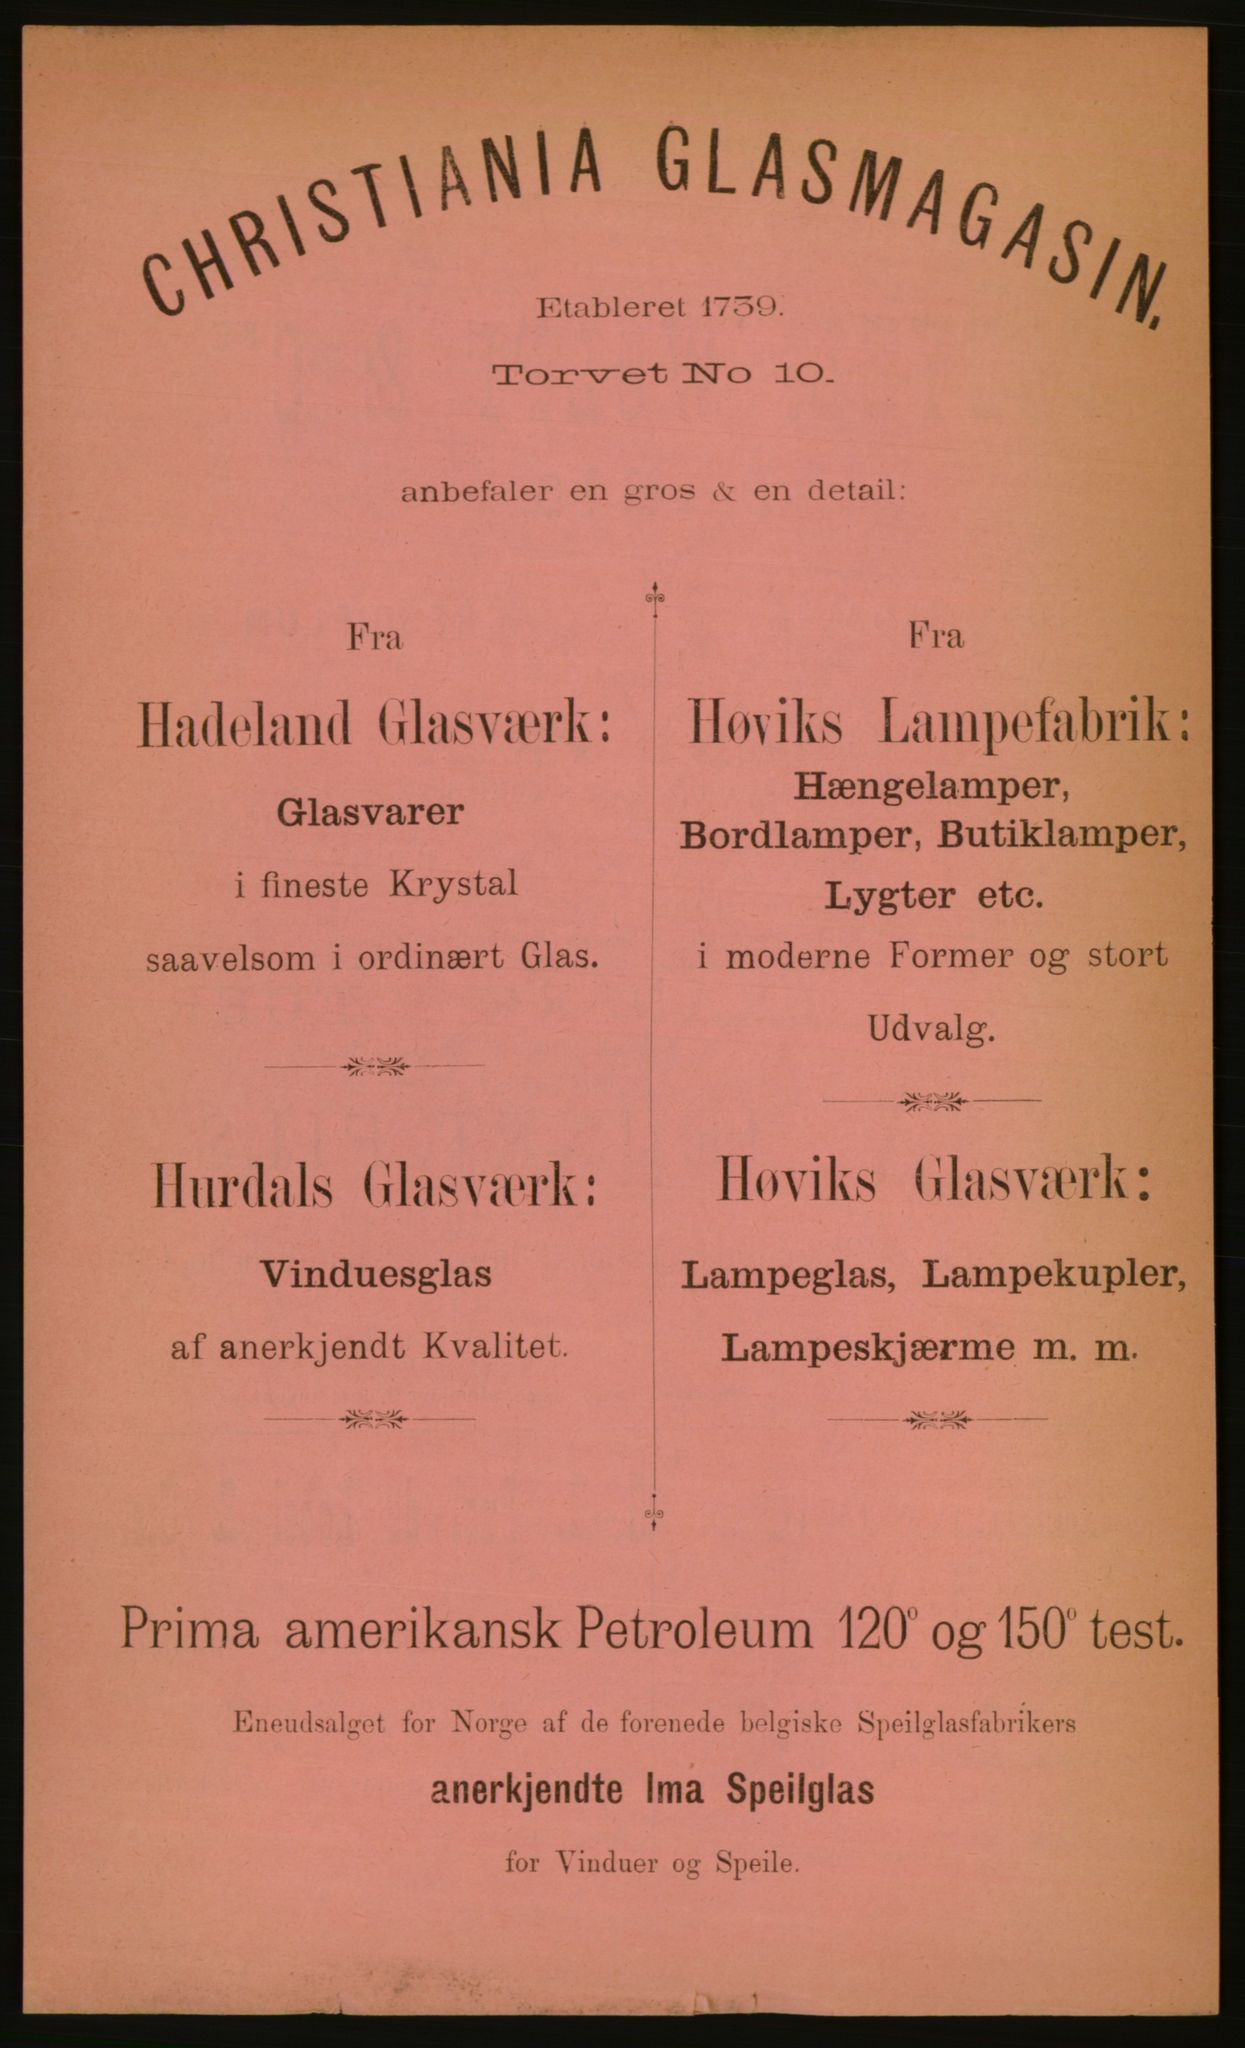 Kristiania/Oslo adressebok, PUBL/-, 1891